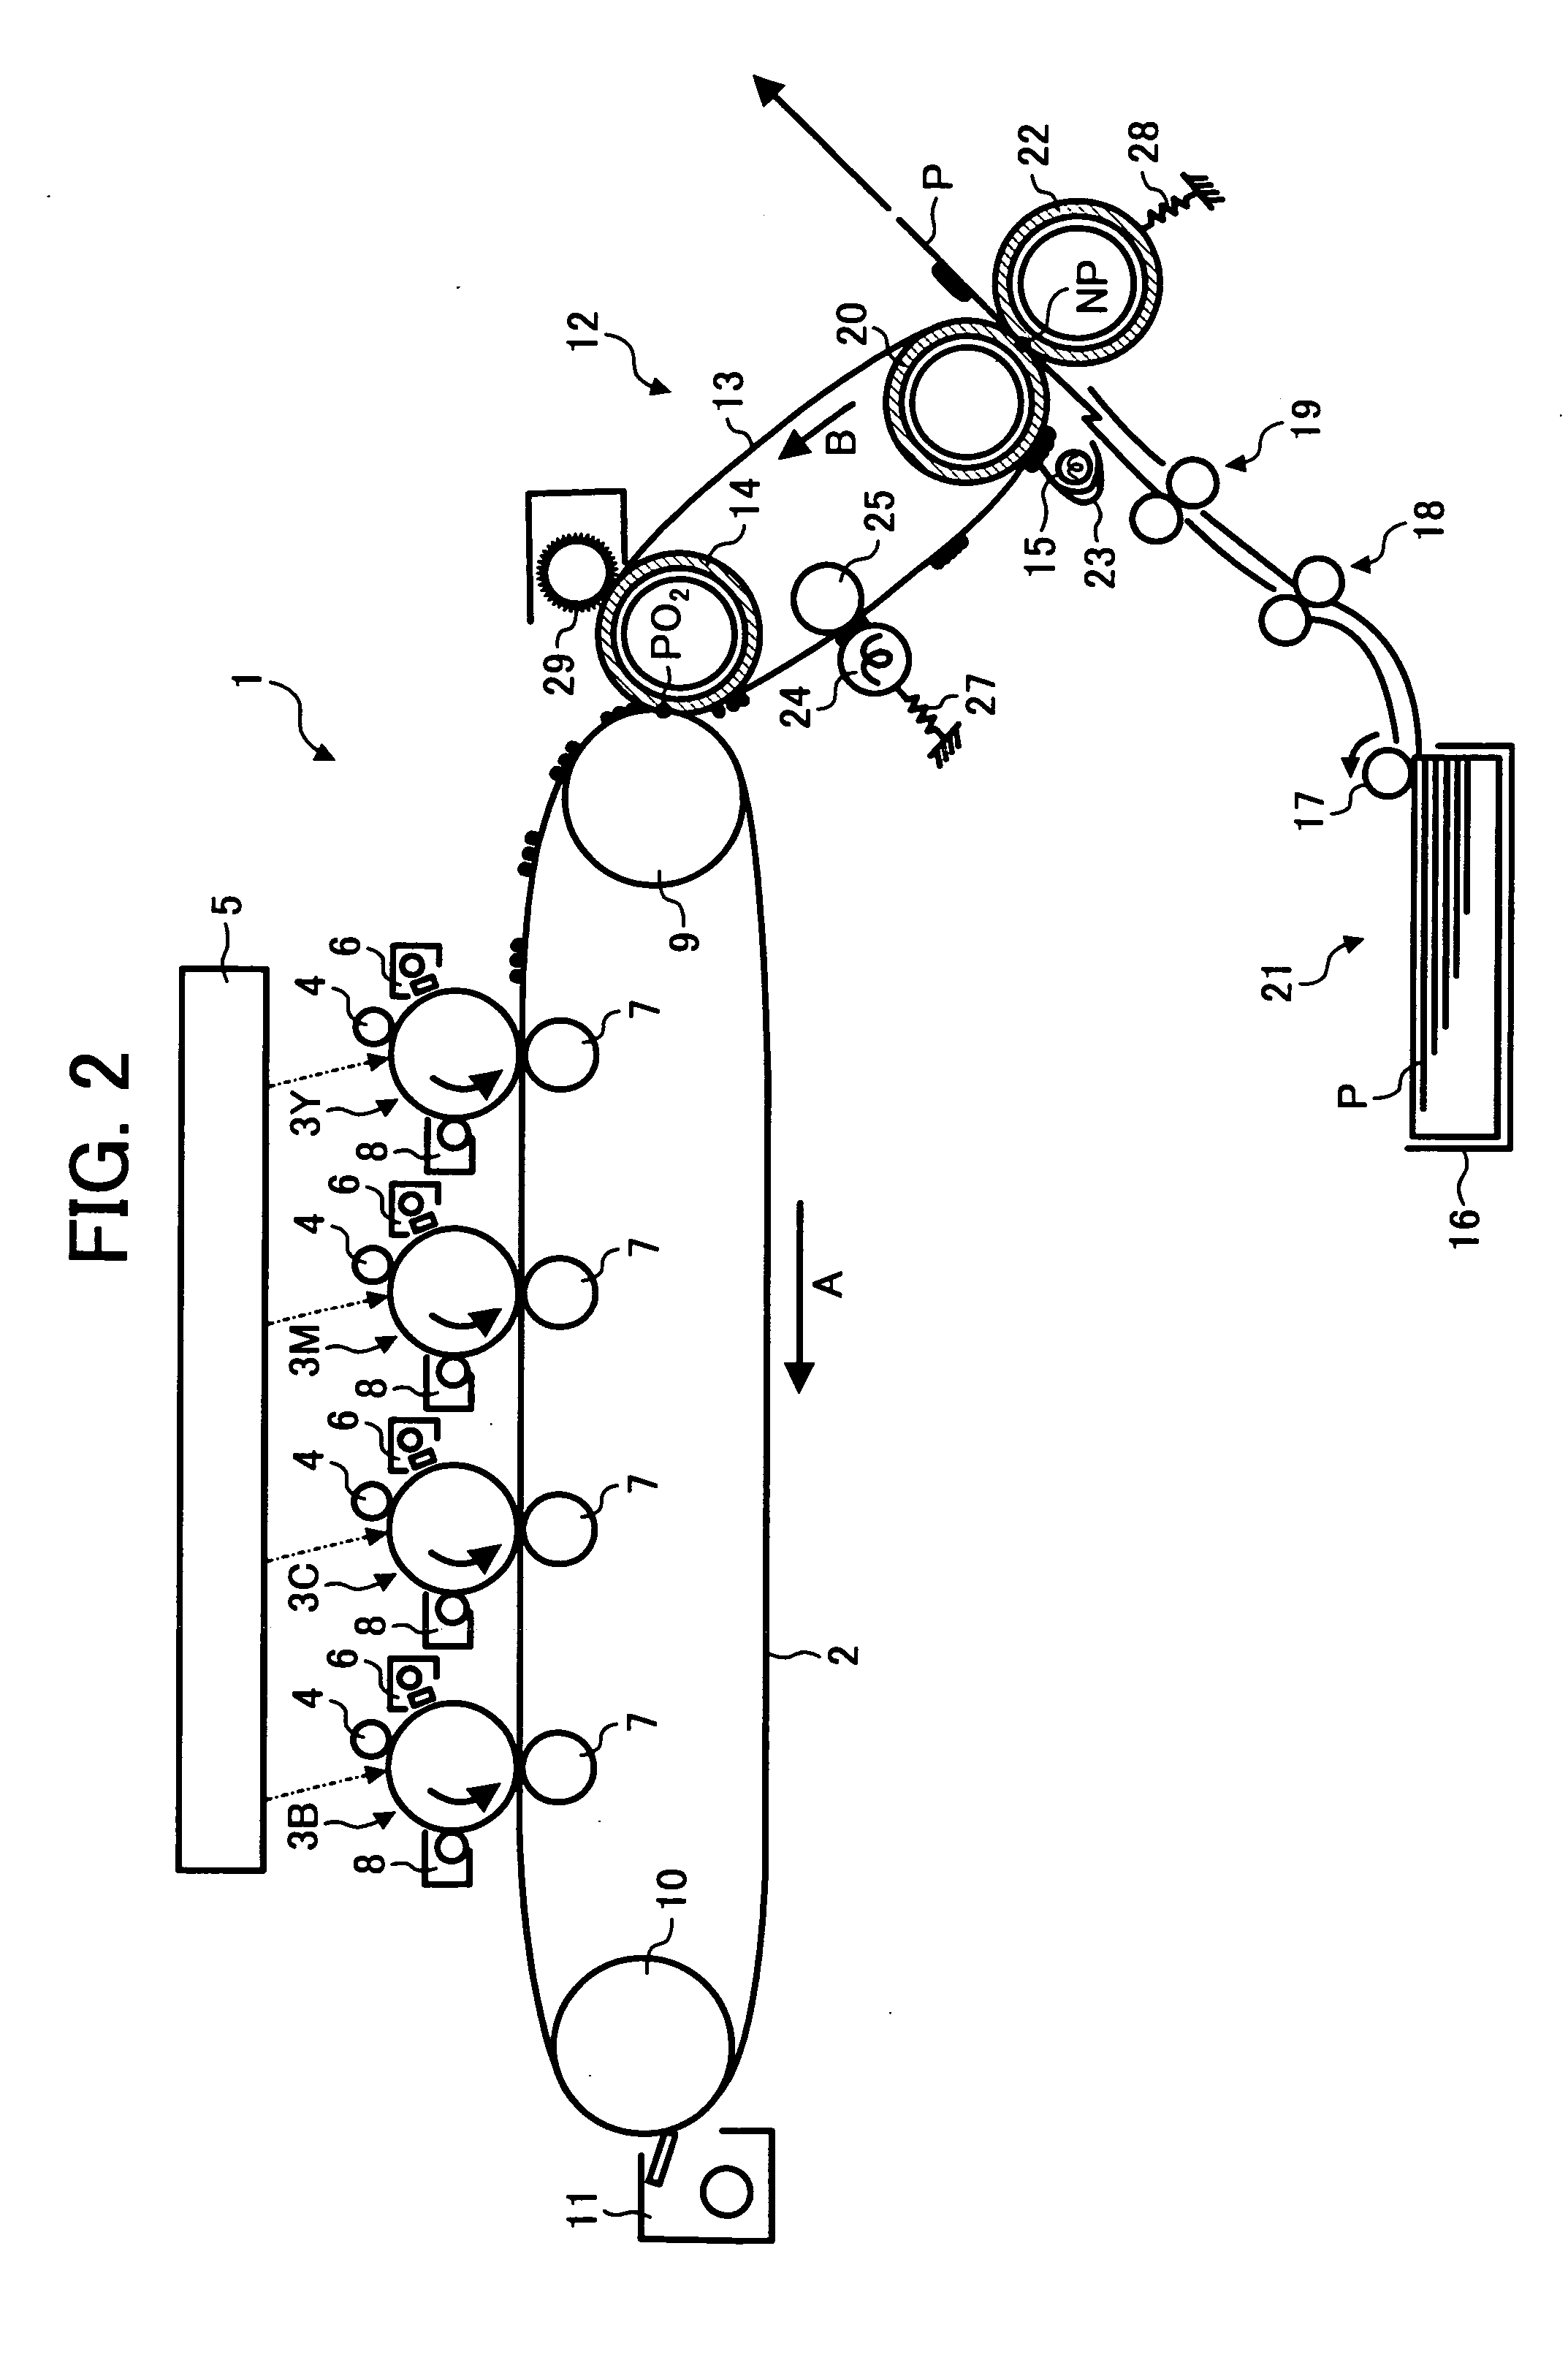 Method of uniformly fixing toner to recording medium in image forming apparatus